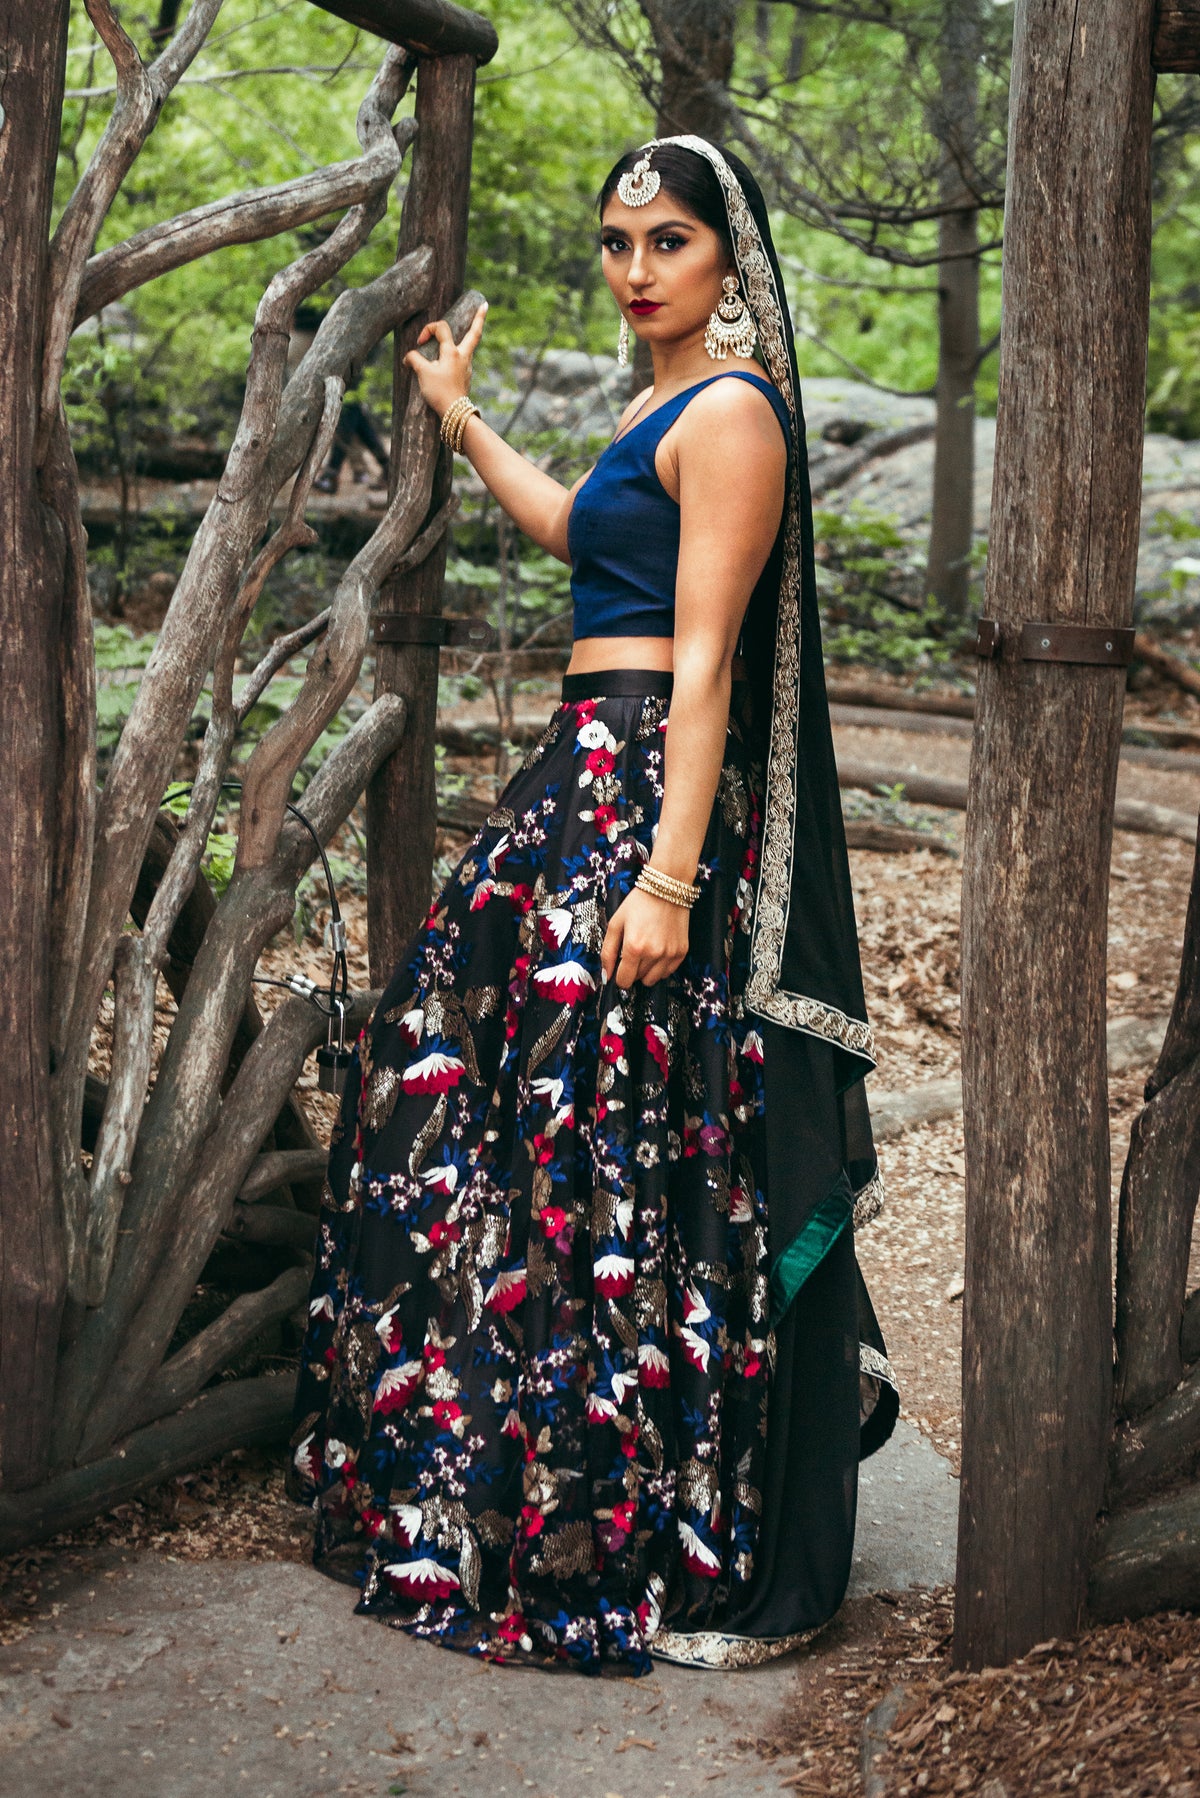 NEELA Floral Sequin Skirt - Side View - Harleen Kaur - Ethically Made Womenswear